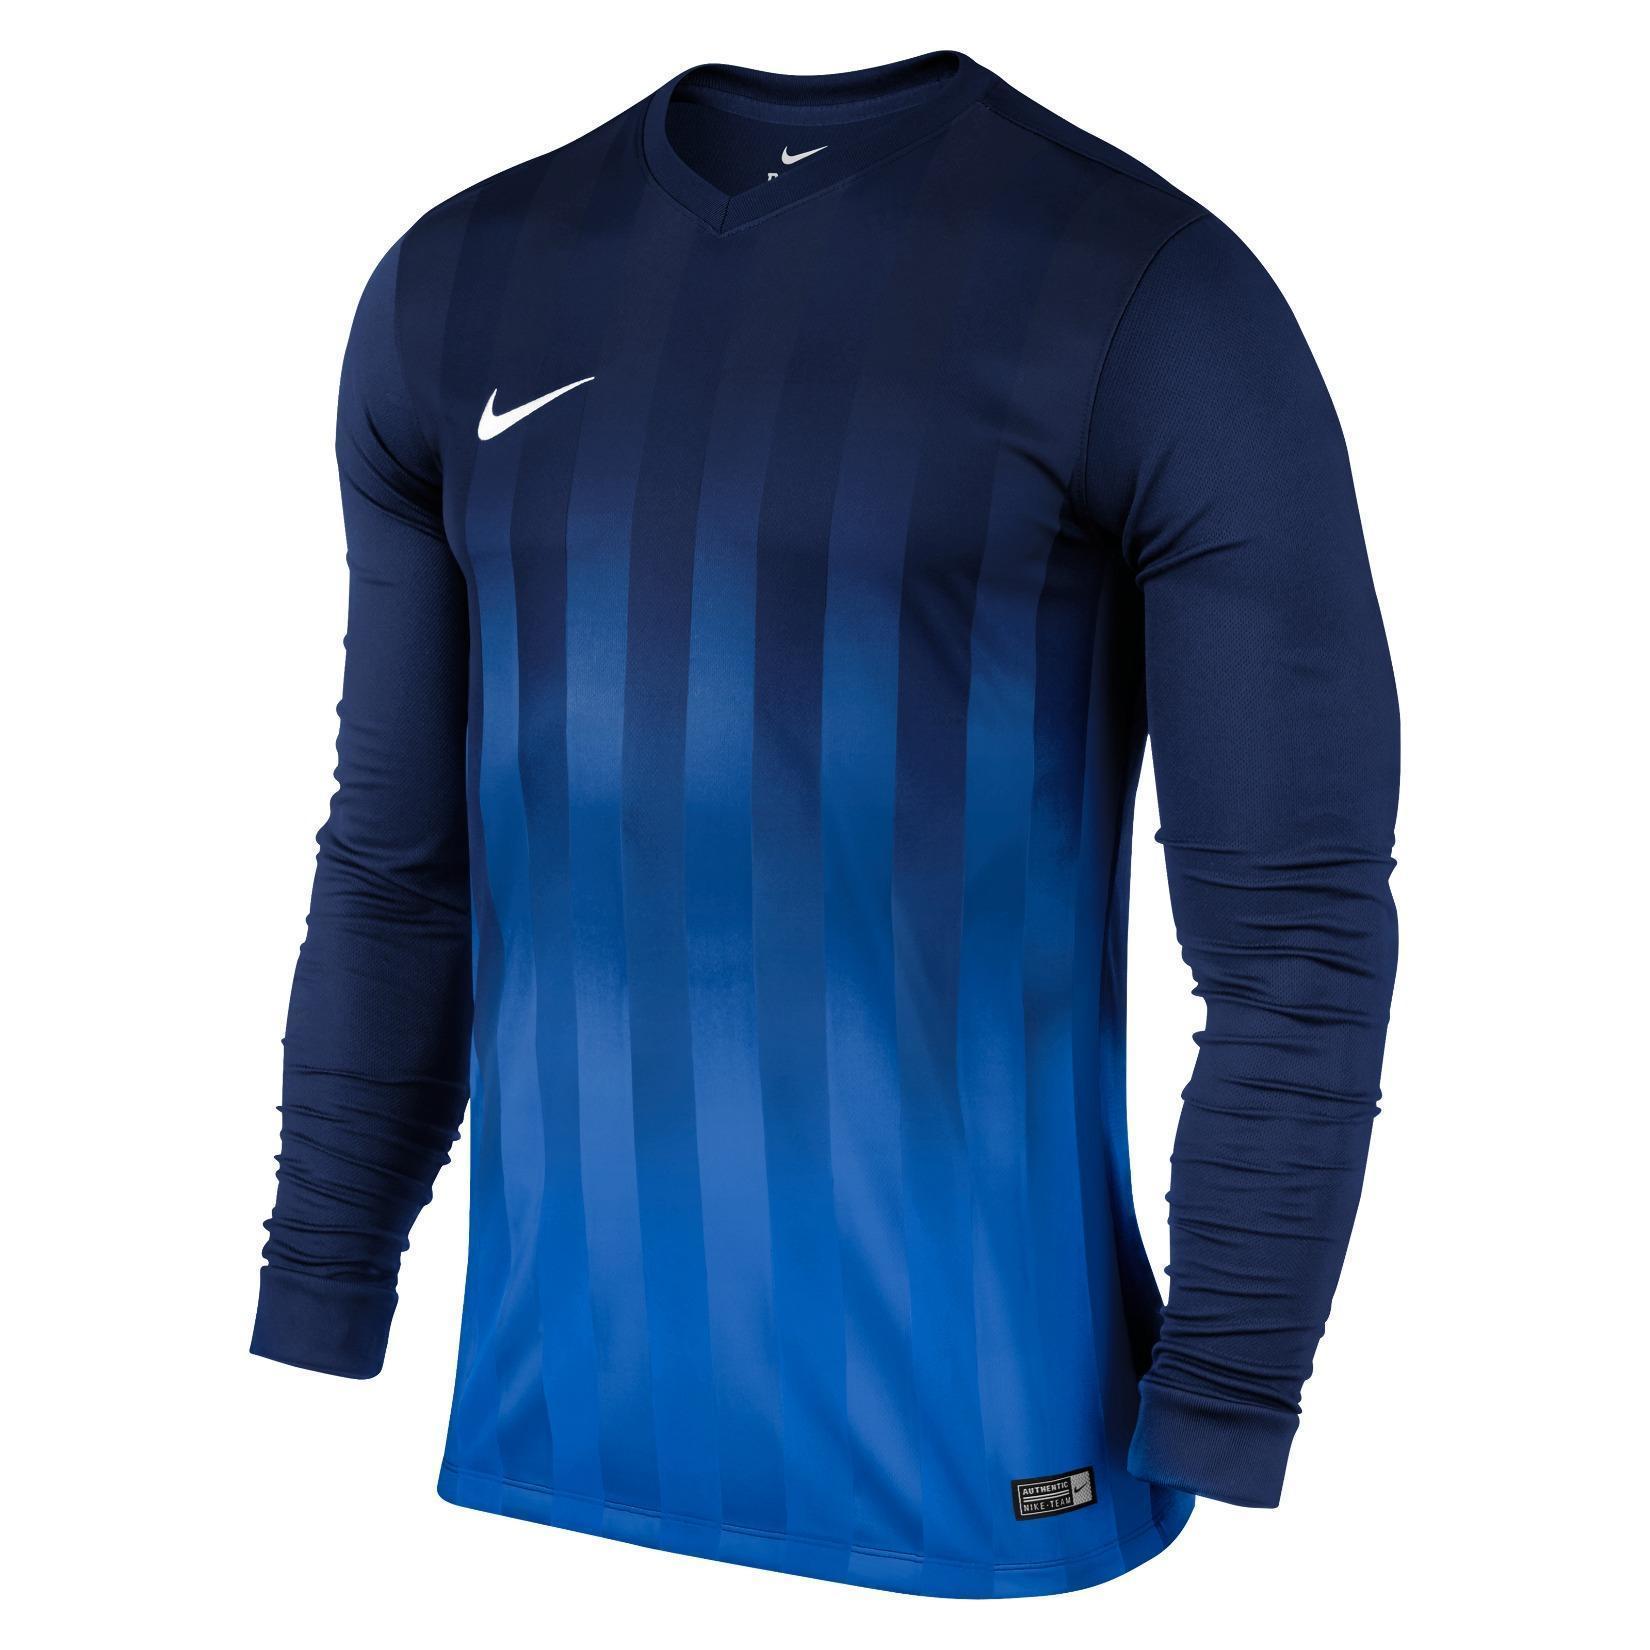 Nike Striped Division II Long Sleeve Football Shirt - Kitlocker.com